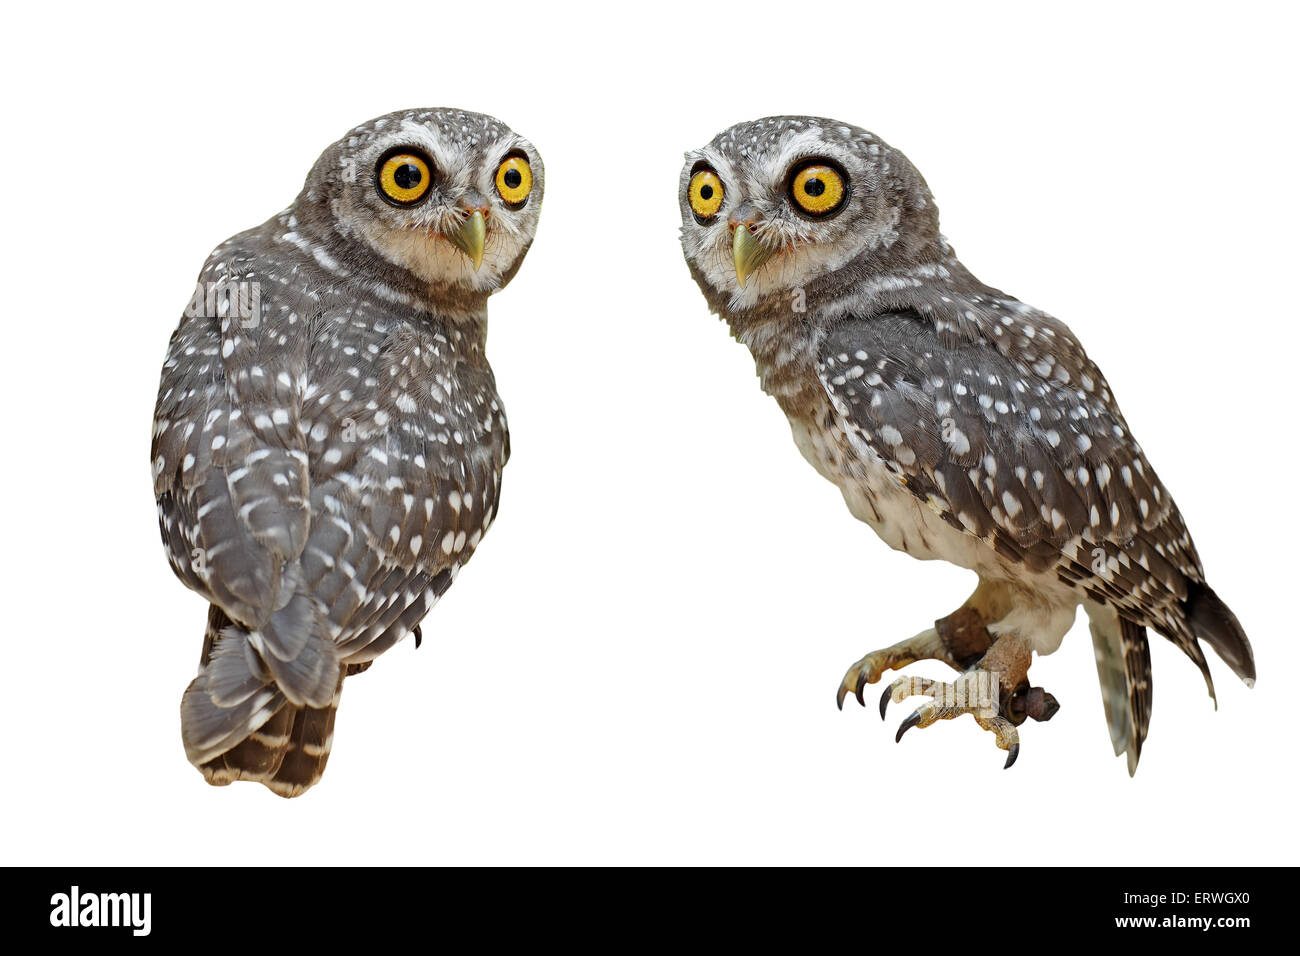 Owlet manchada o athene brama bird aislado sobre fondo blanco. Foto de stock